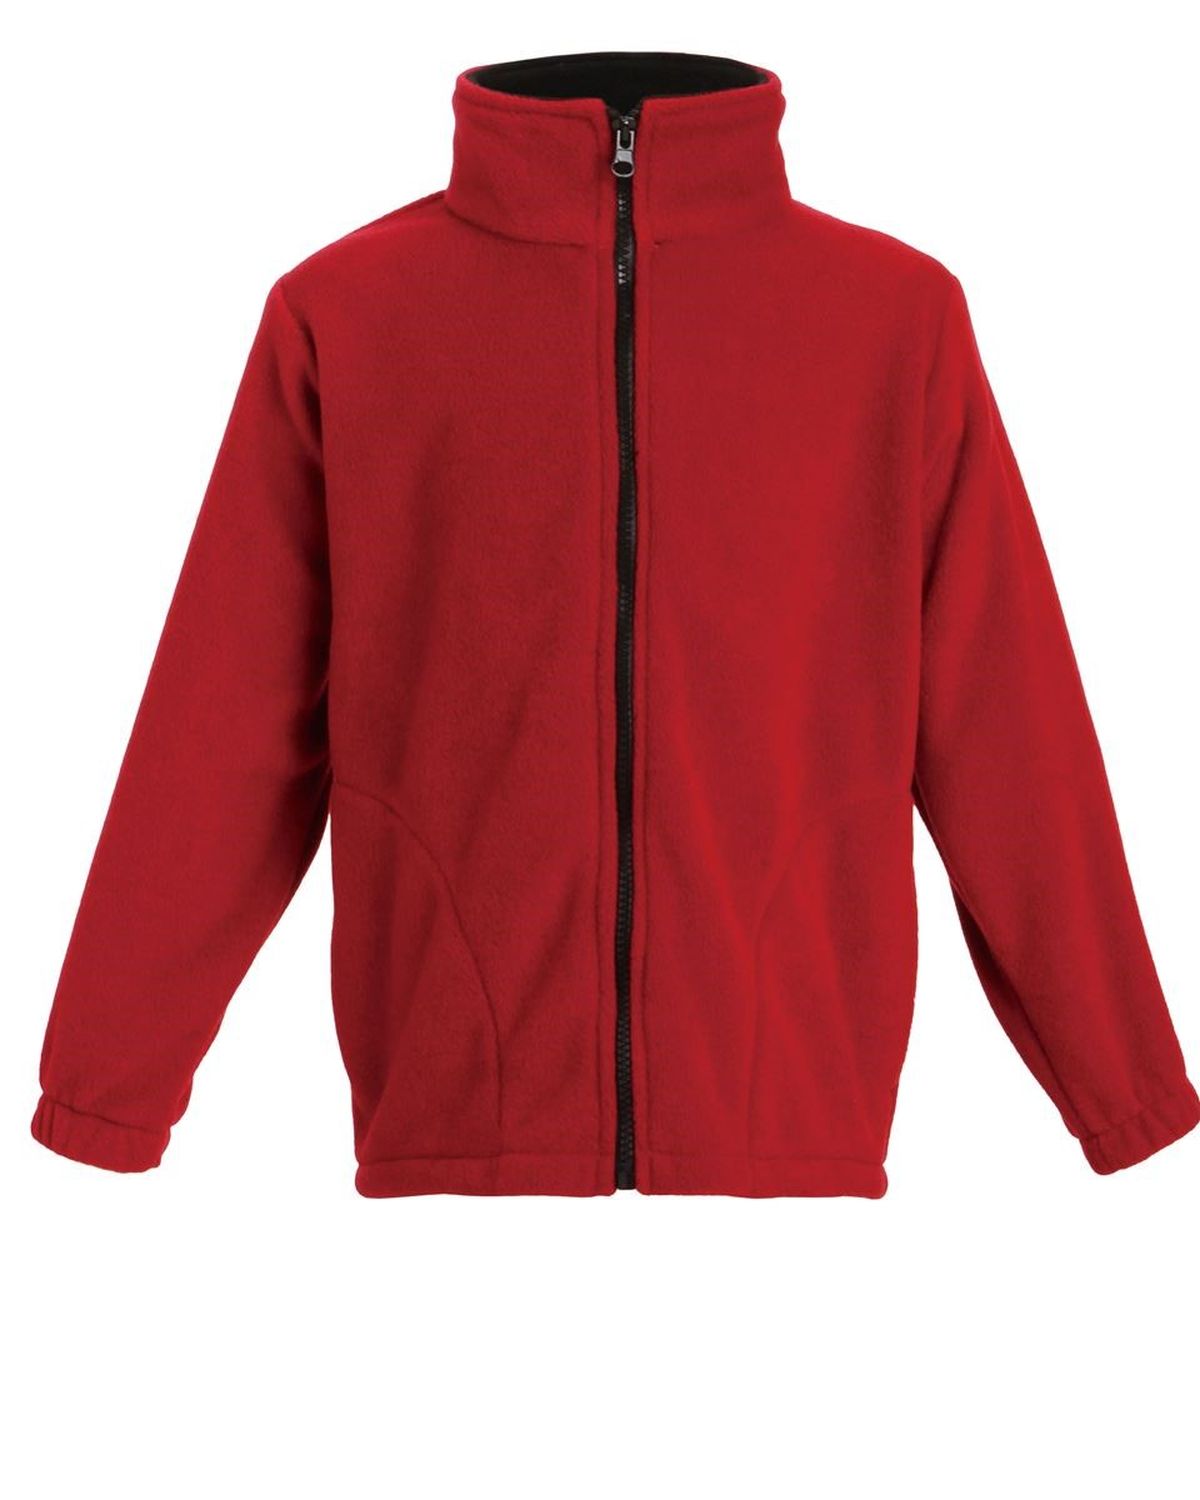 'Landway 9804k Premium Fleece Youth Jacket'